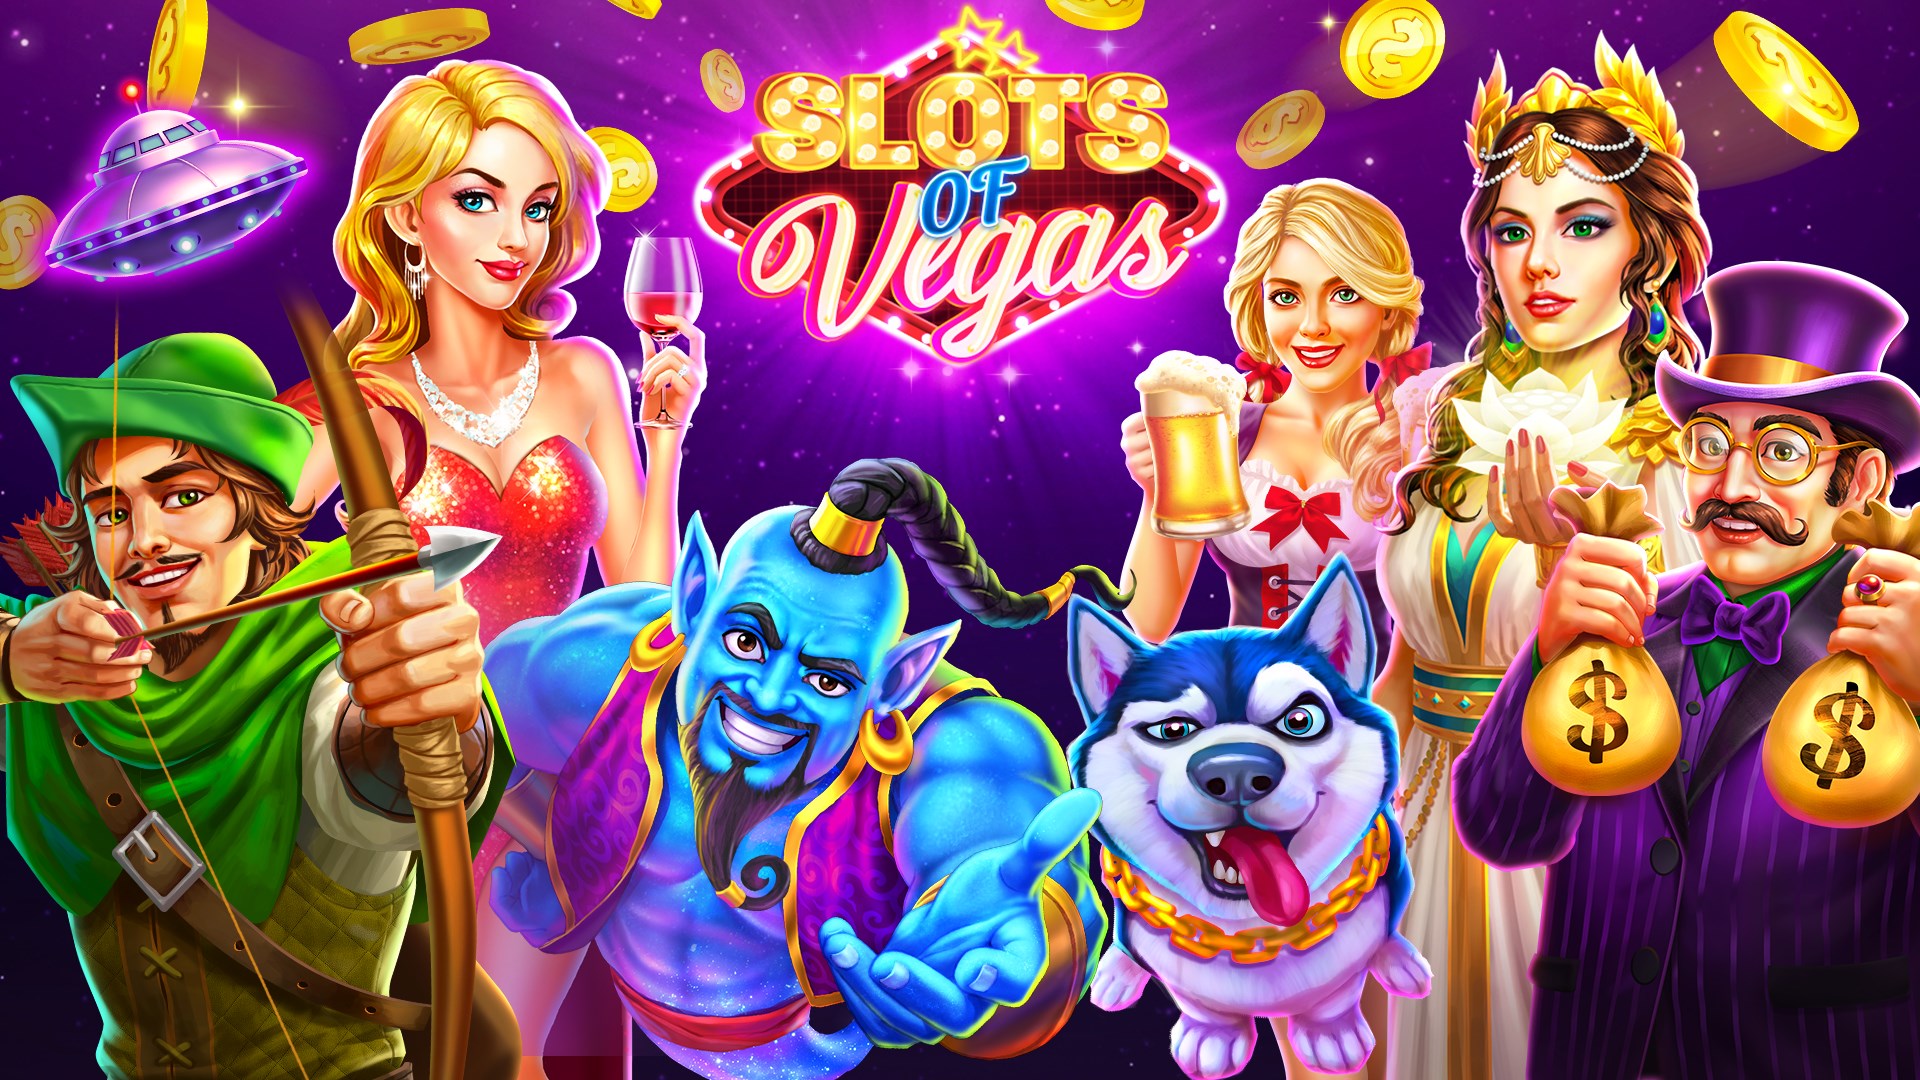 Slots E Jogos De Gambling casino slot games real money enterprise